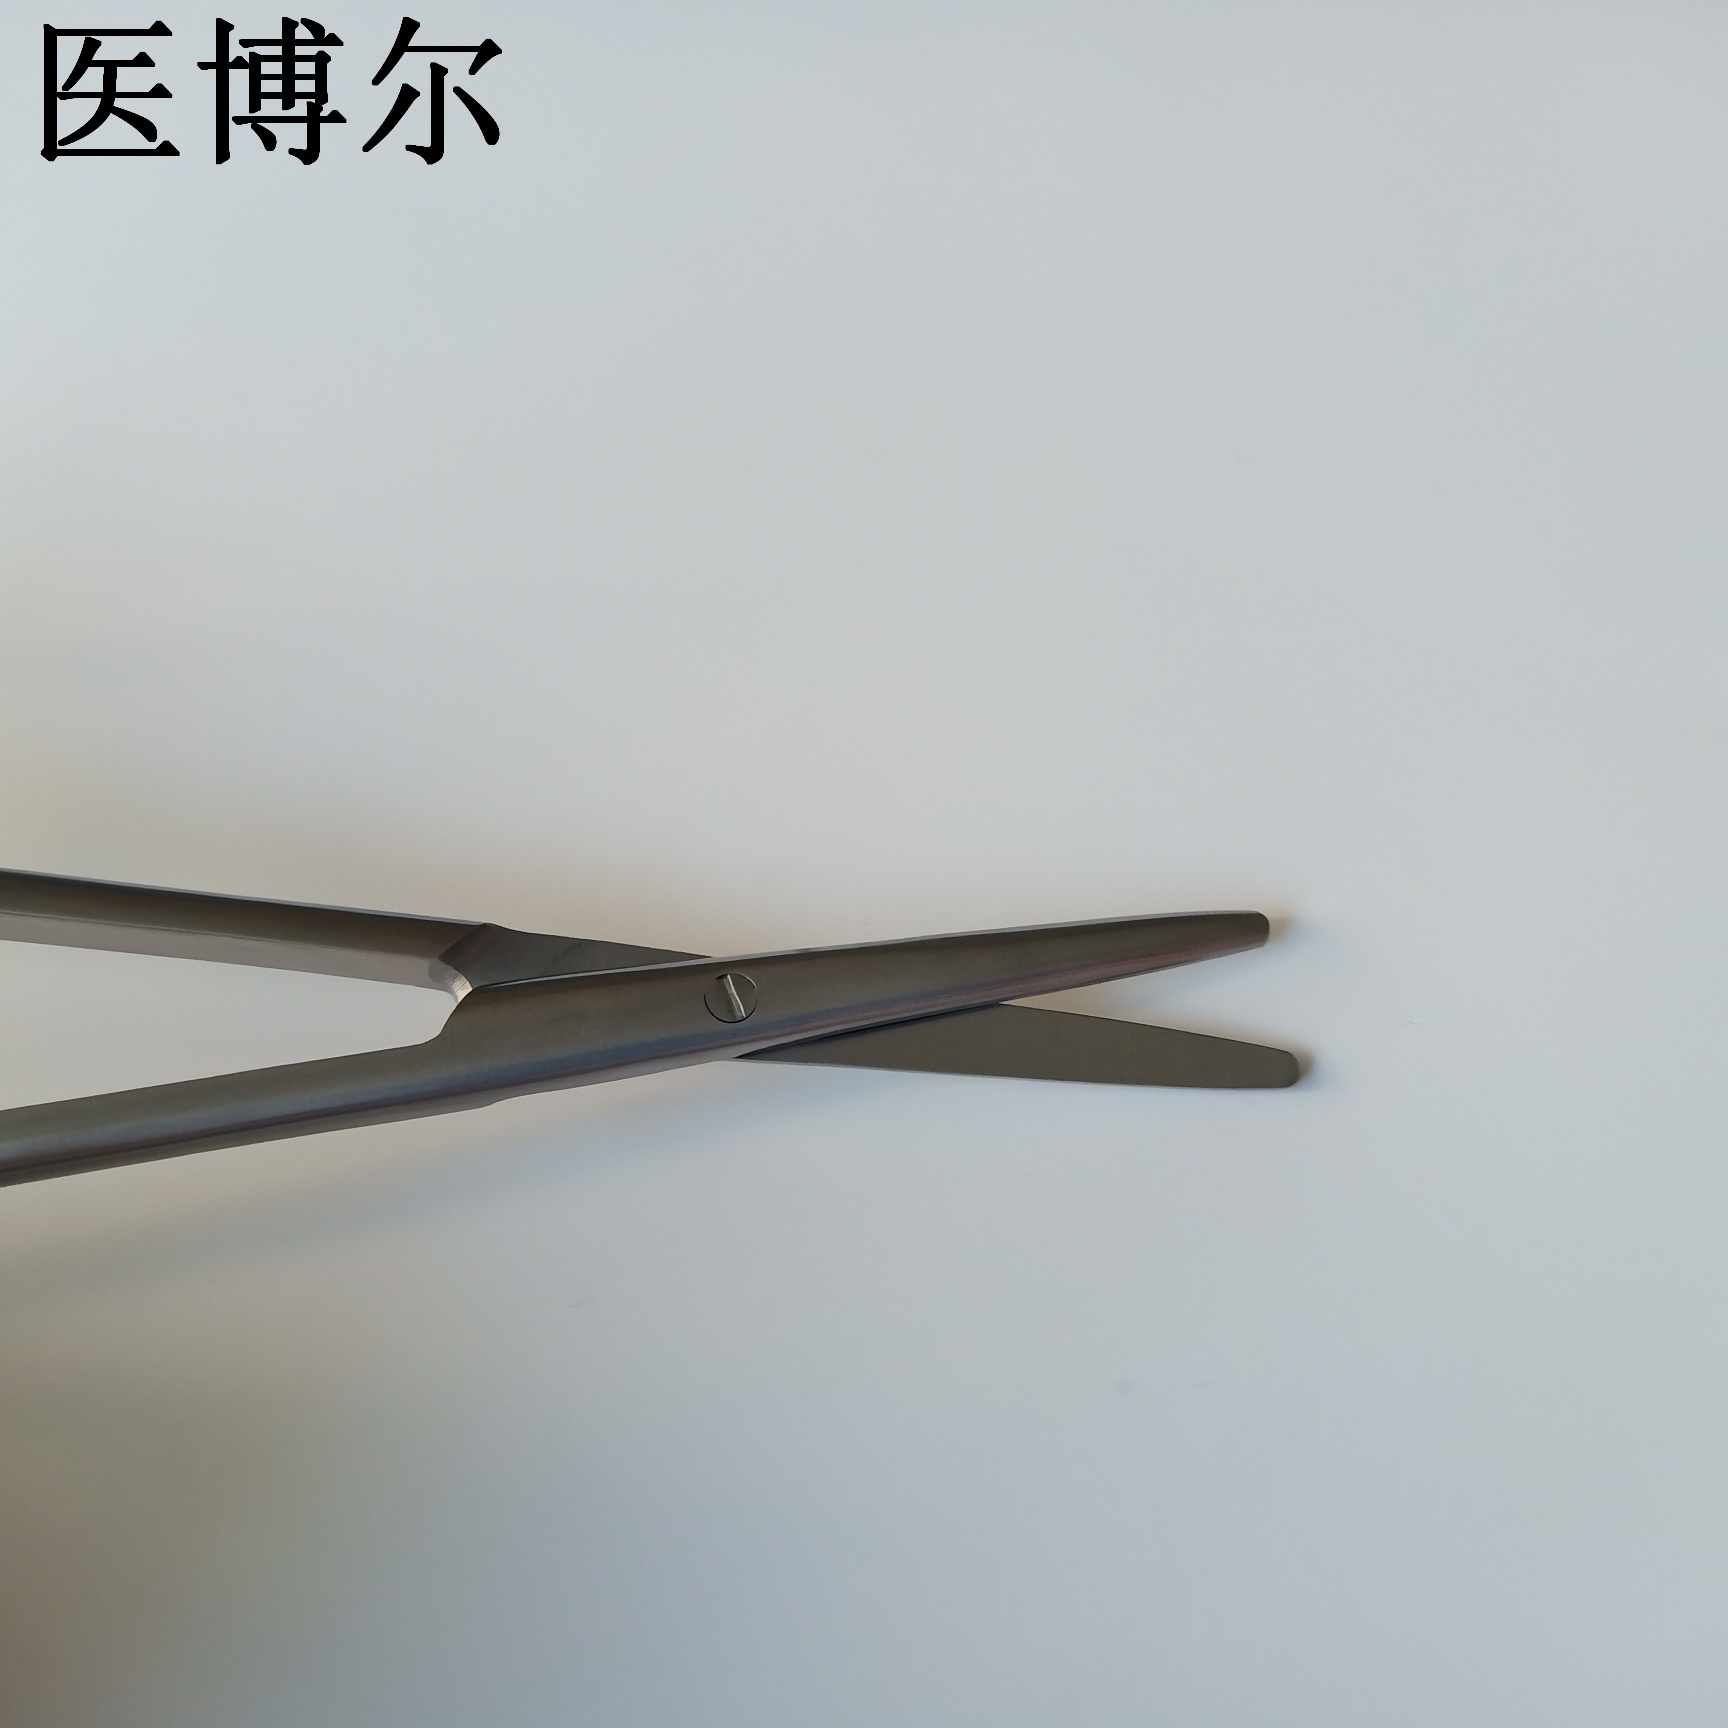 14cm精细直圆剪刀 (3).jpg